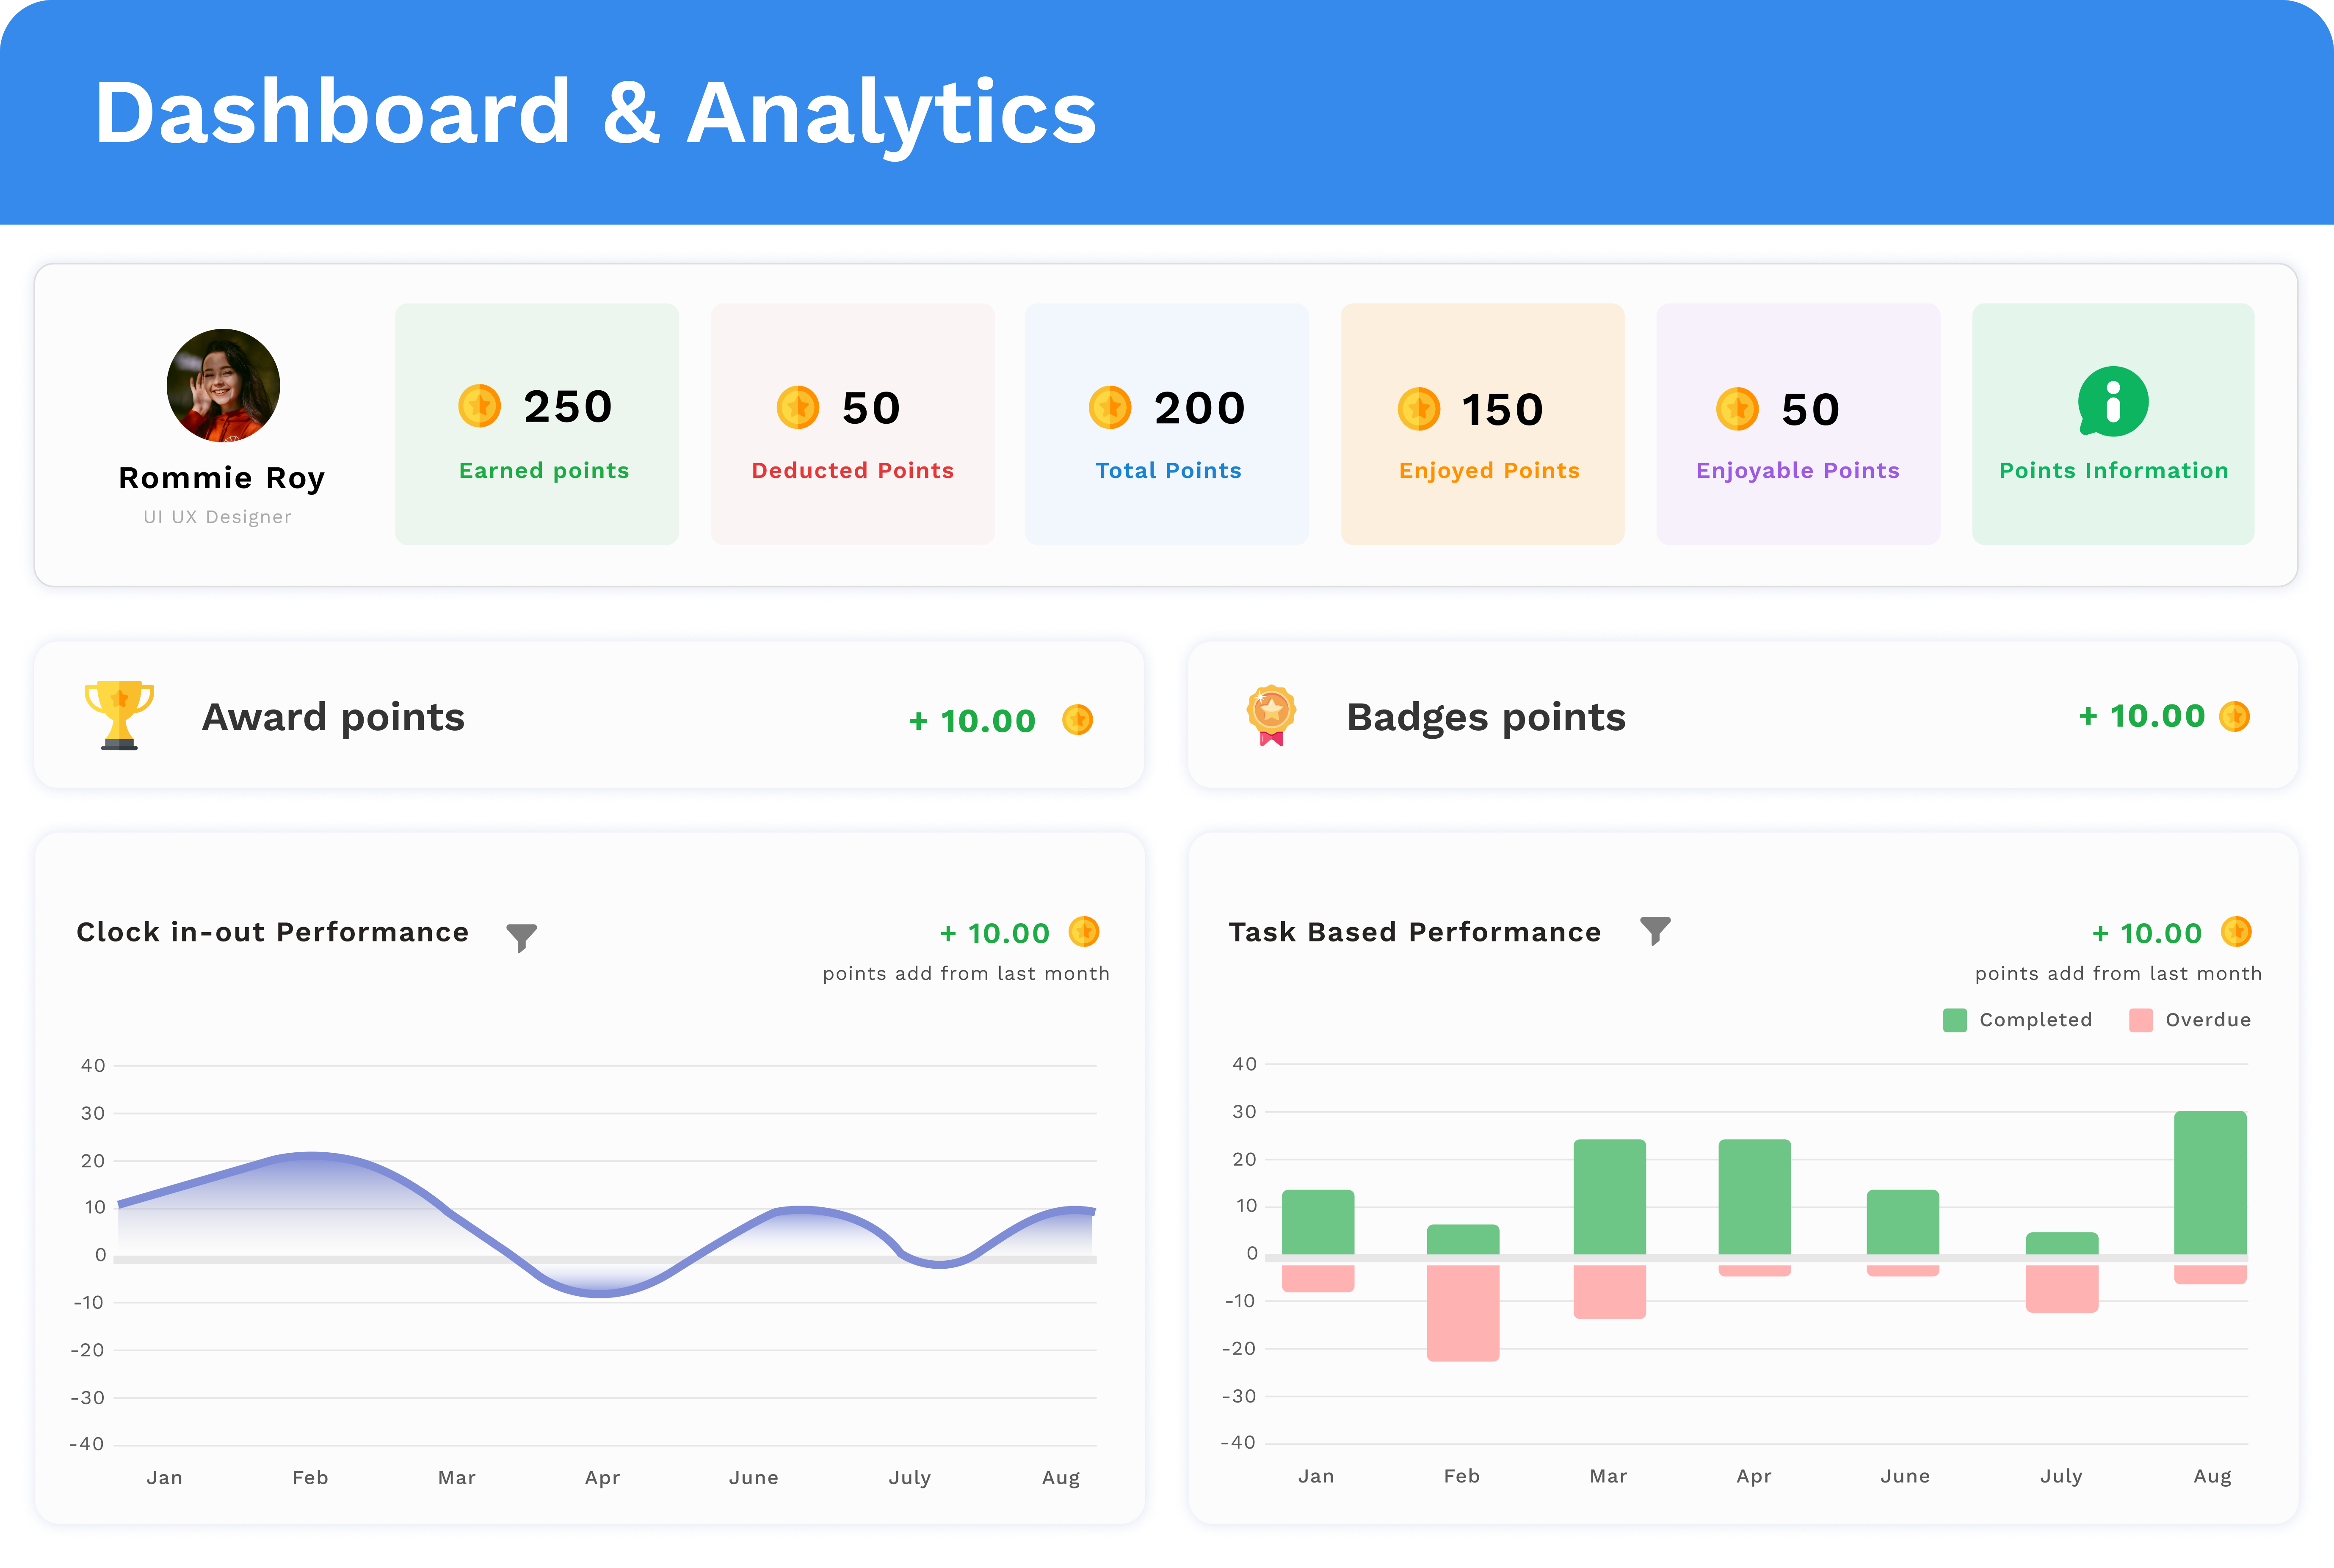 Dashboard & Analytics image